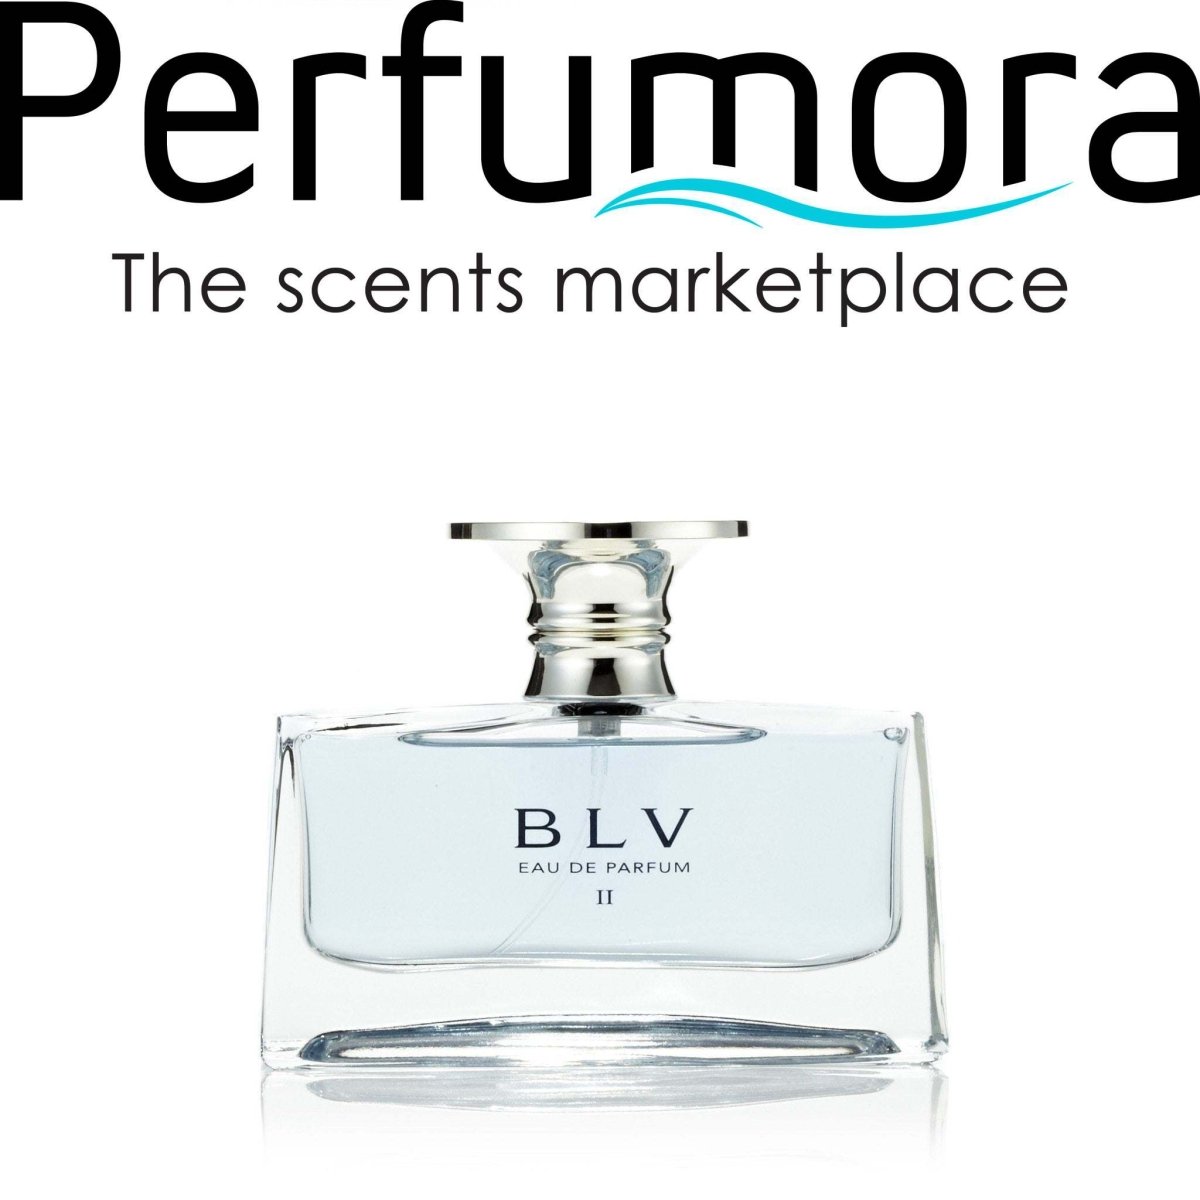 Bvlgari Blv Ii Eau de Parfum Womens Spray 2.5 oz.